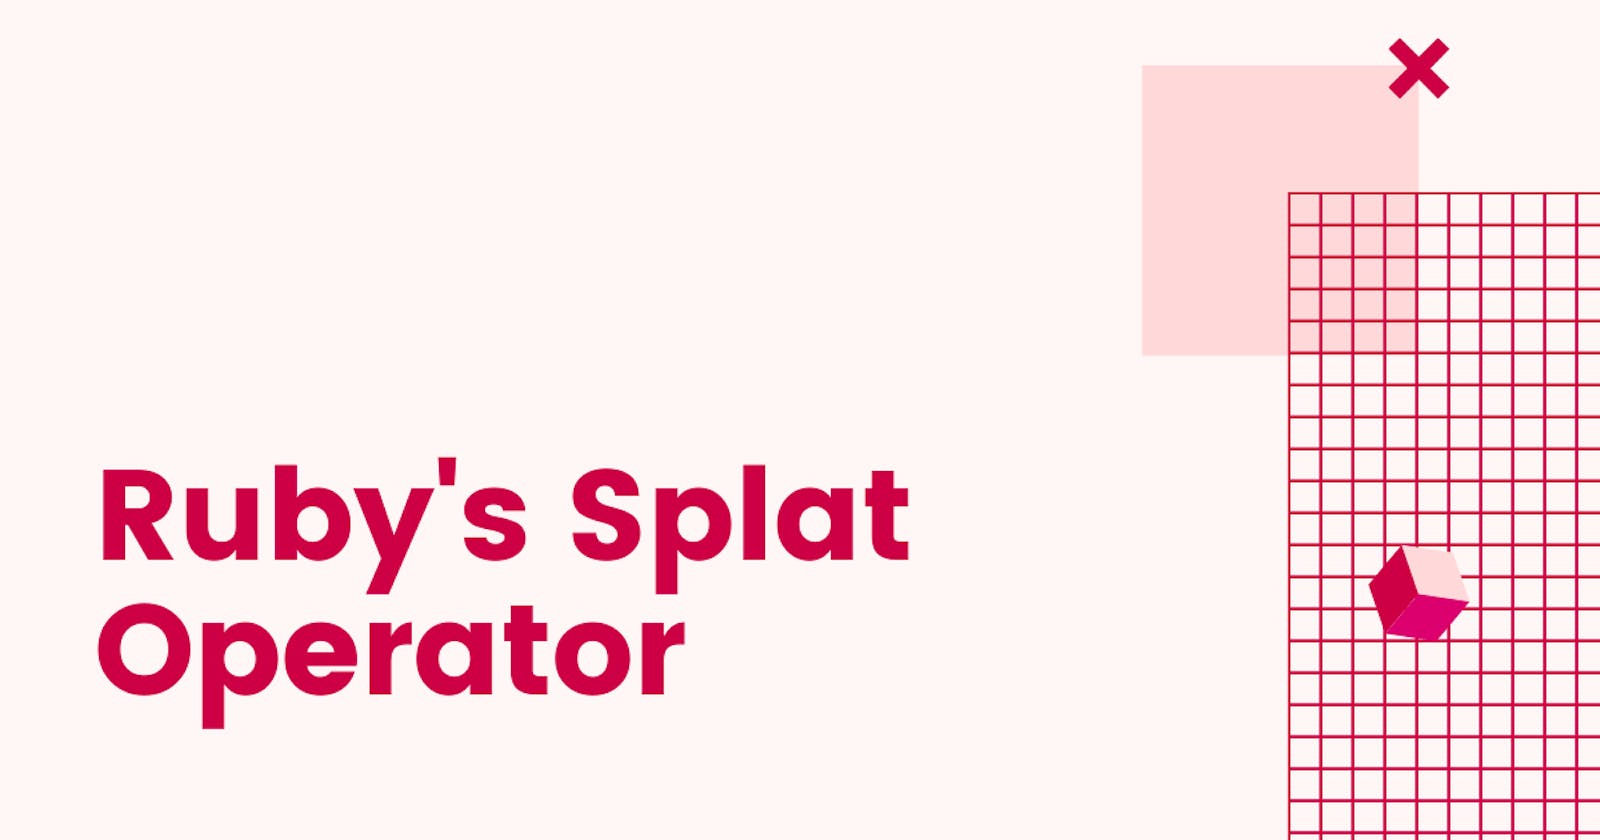 Ruby's Splat Operator